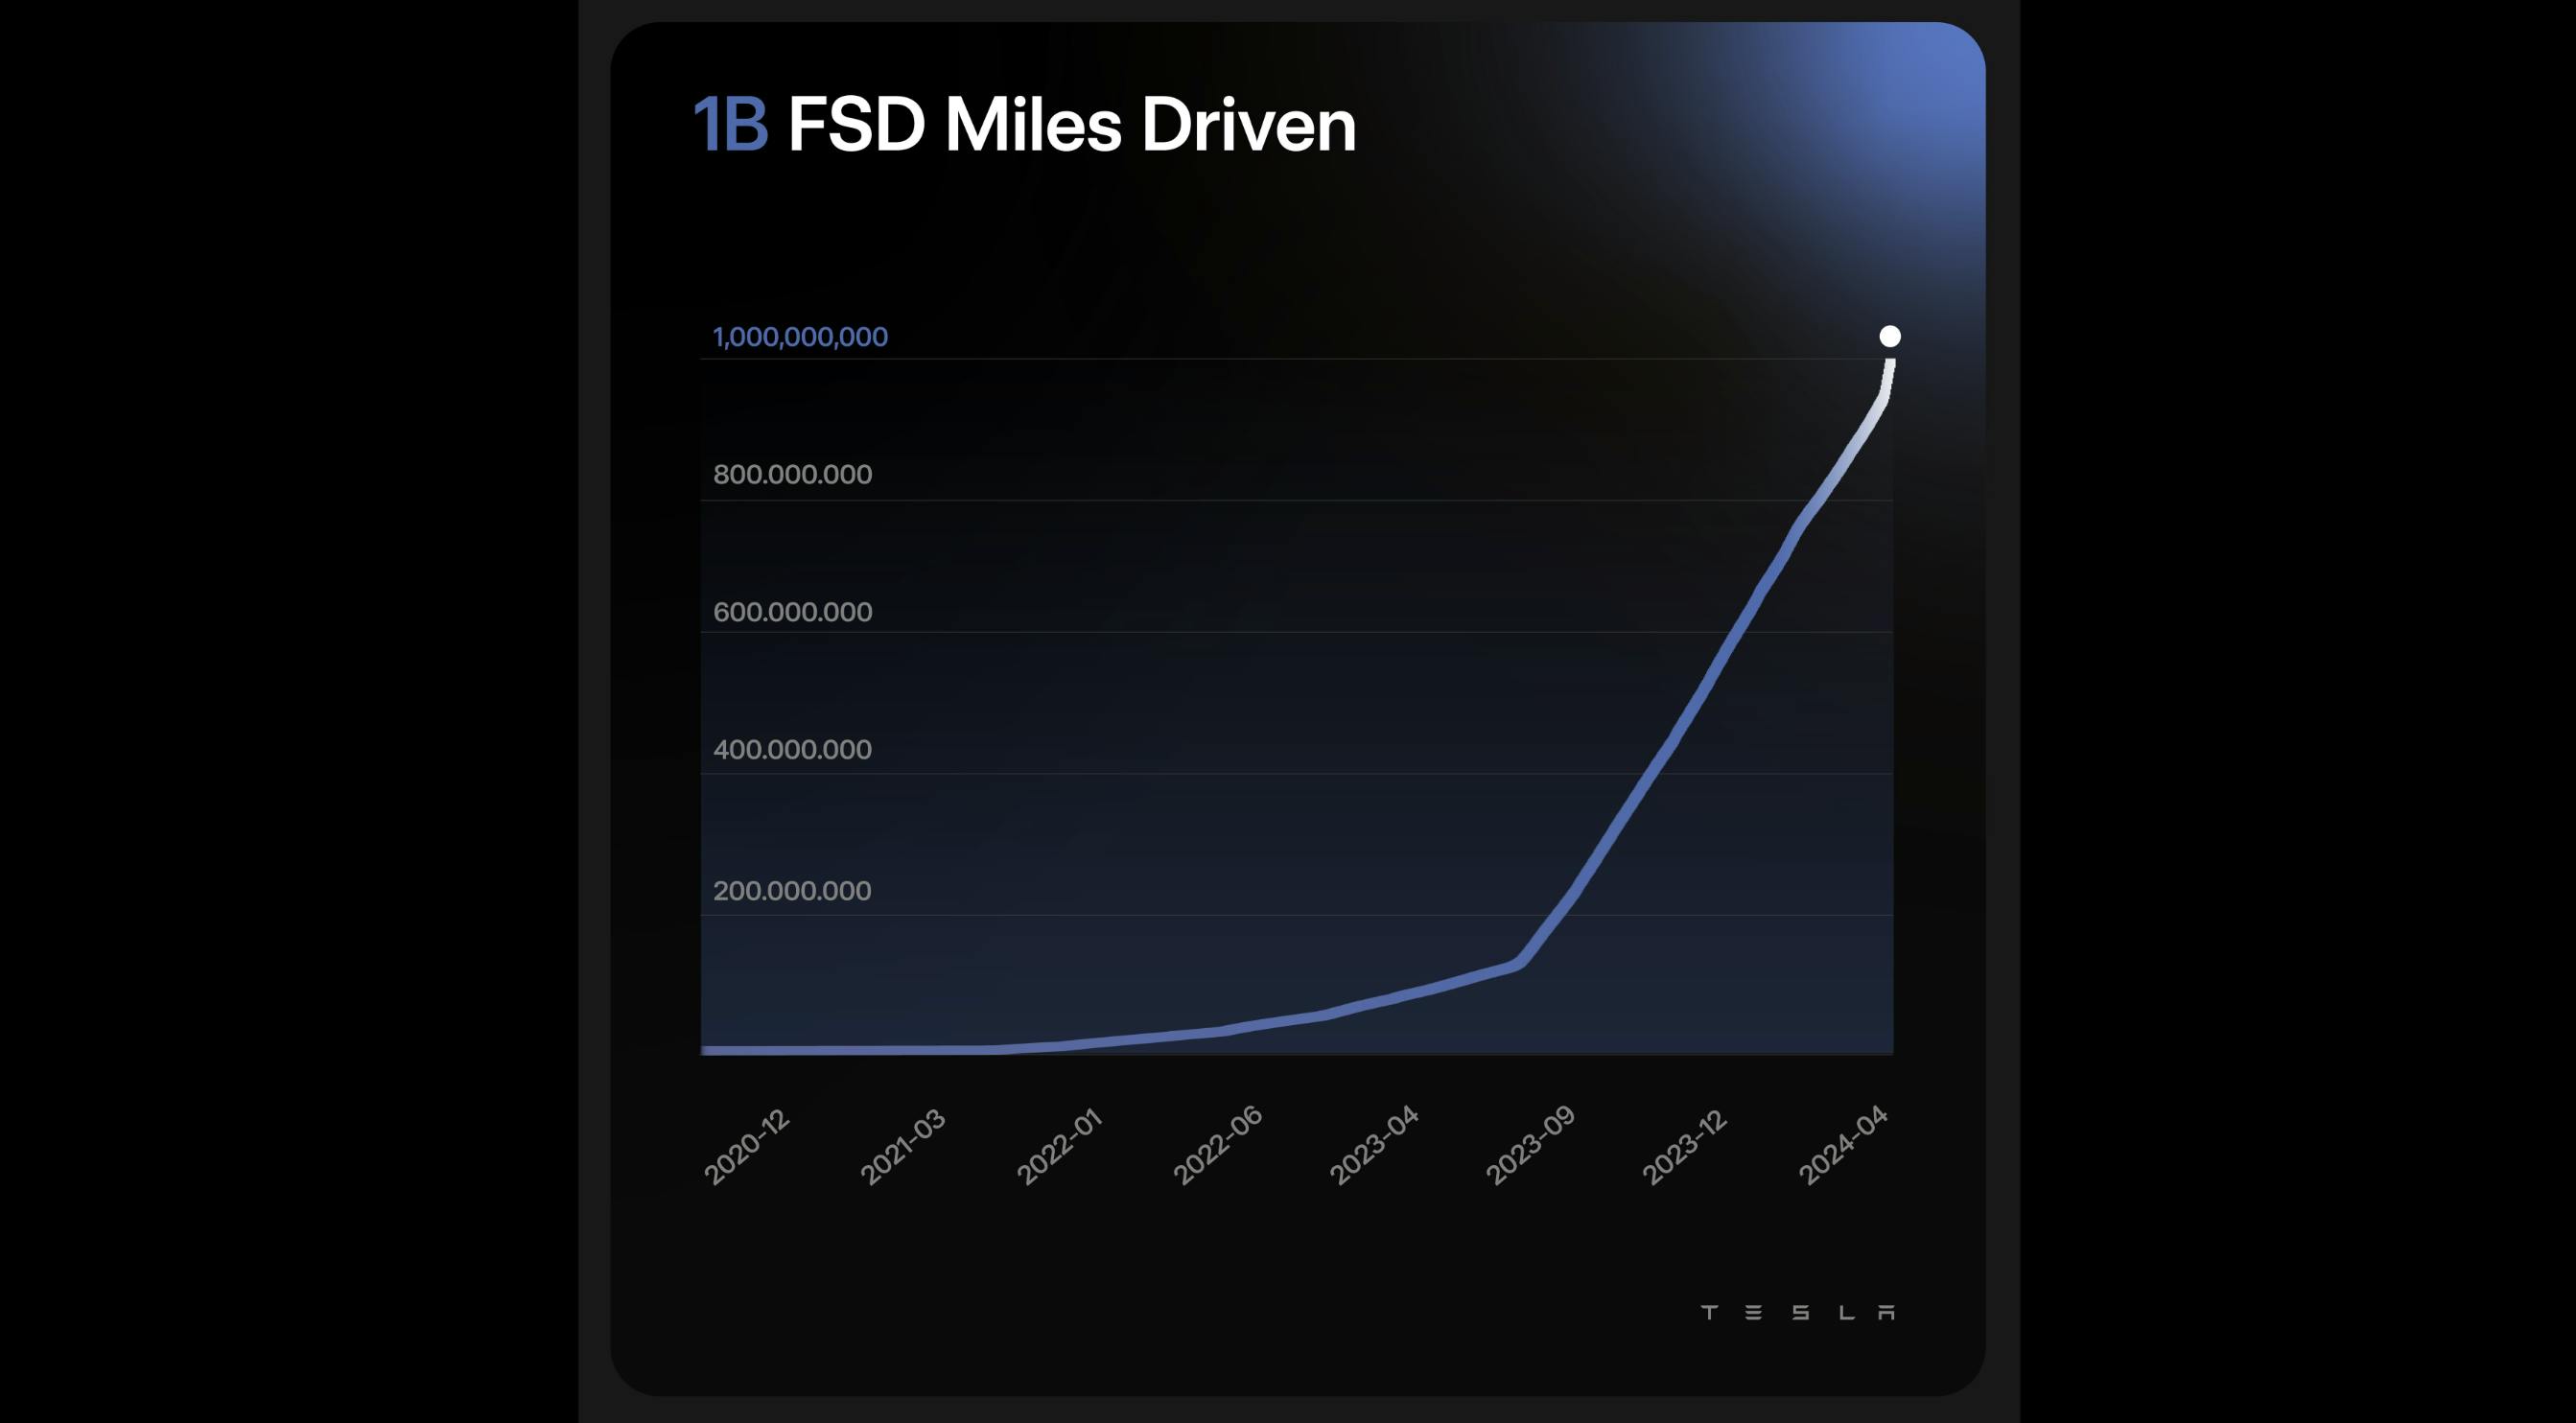 1B miles driven by Full Self-Driving (FSD) Teslas